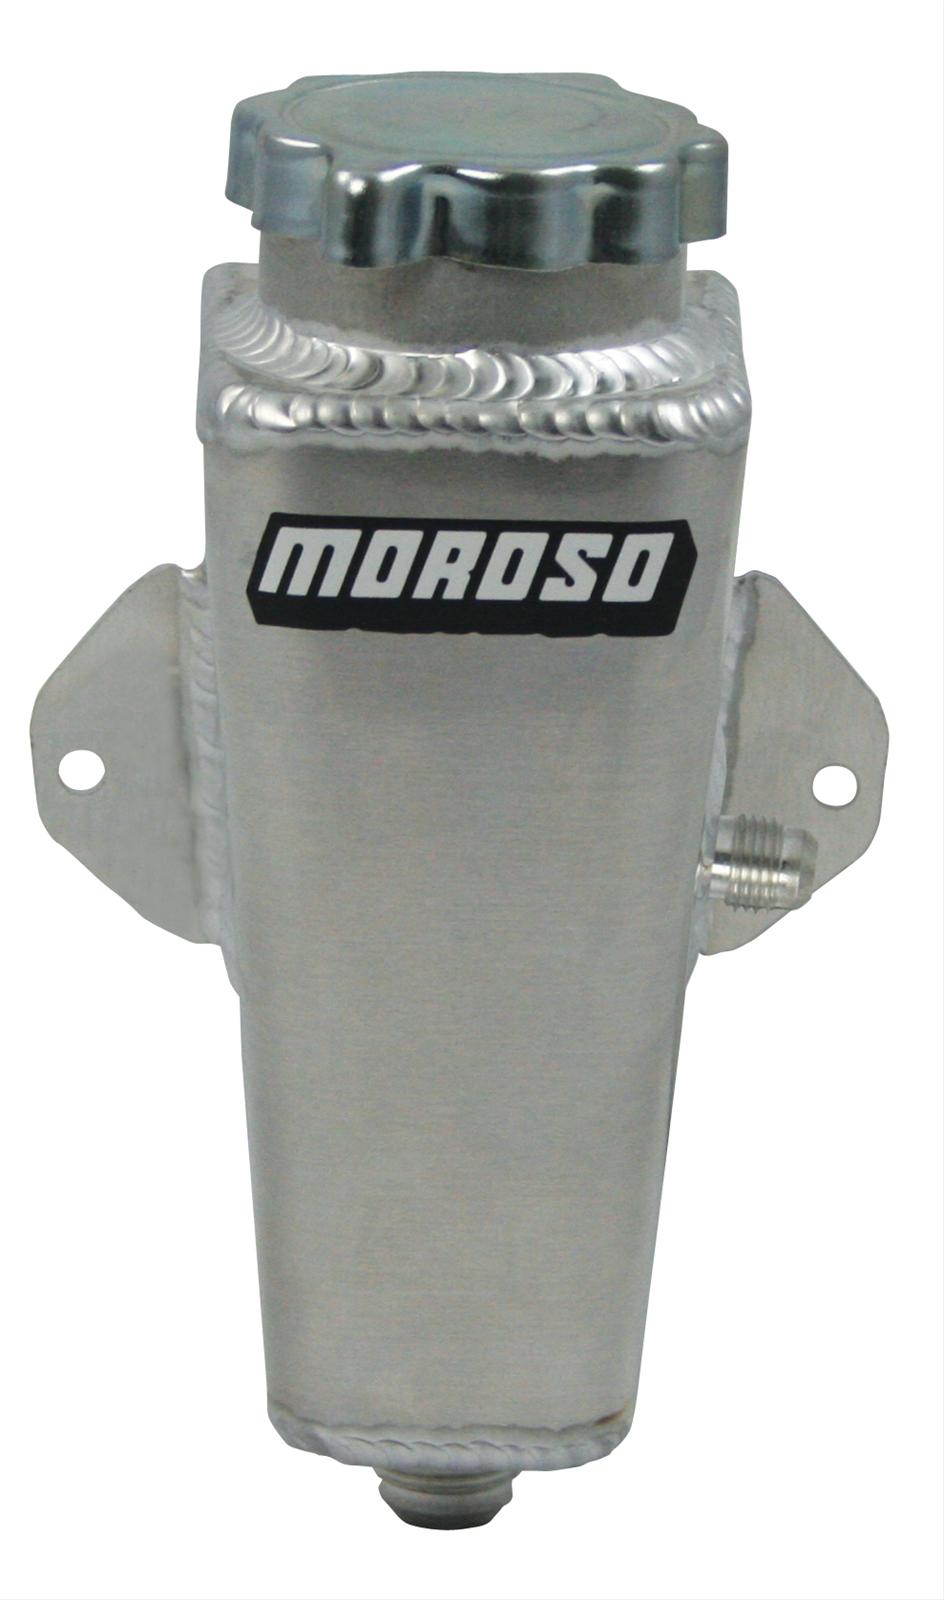 Moroso 63507 Tank, Power Steering, Universal Panel Mount